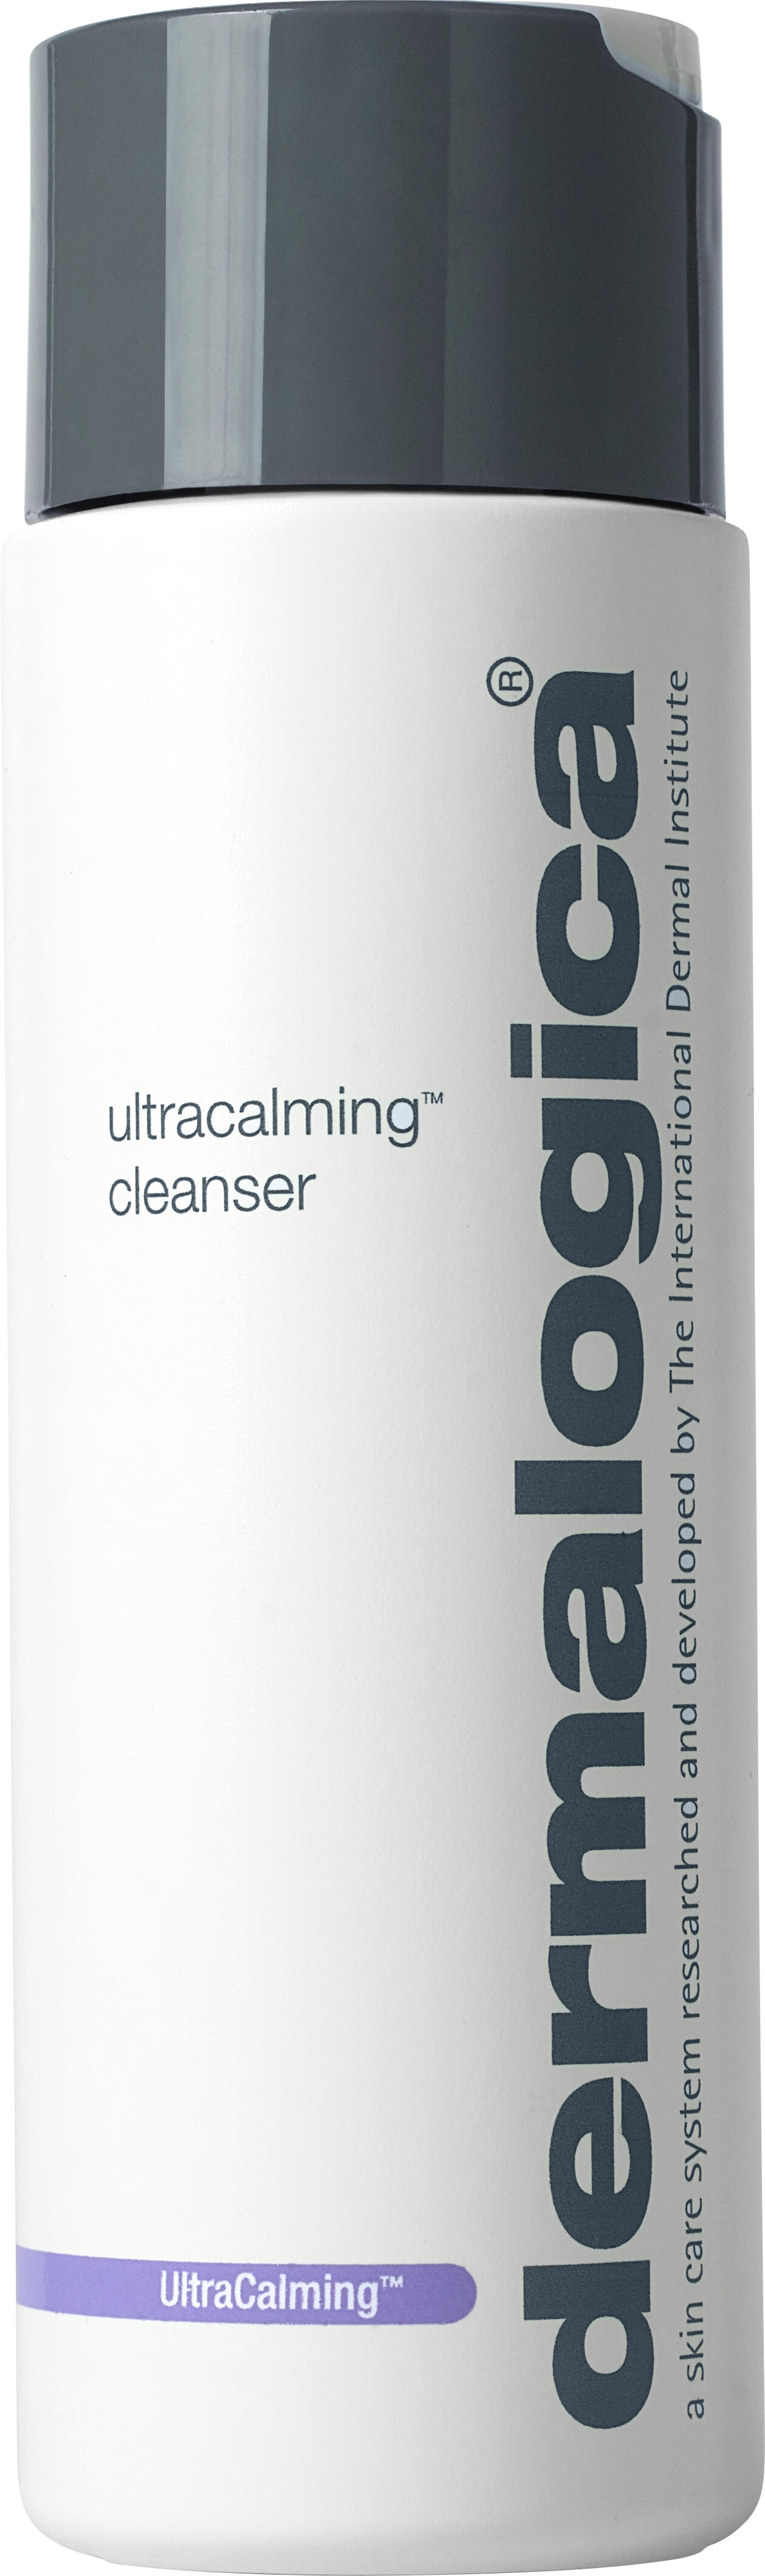 Dermalogica UltraCalming Cleanser 250ml